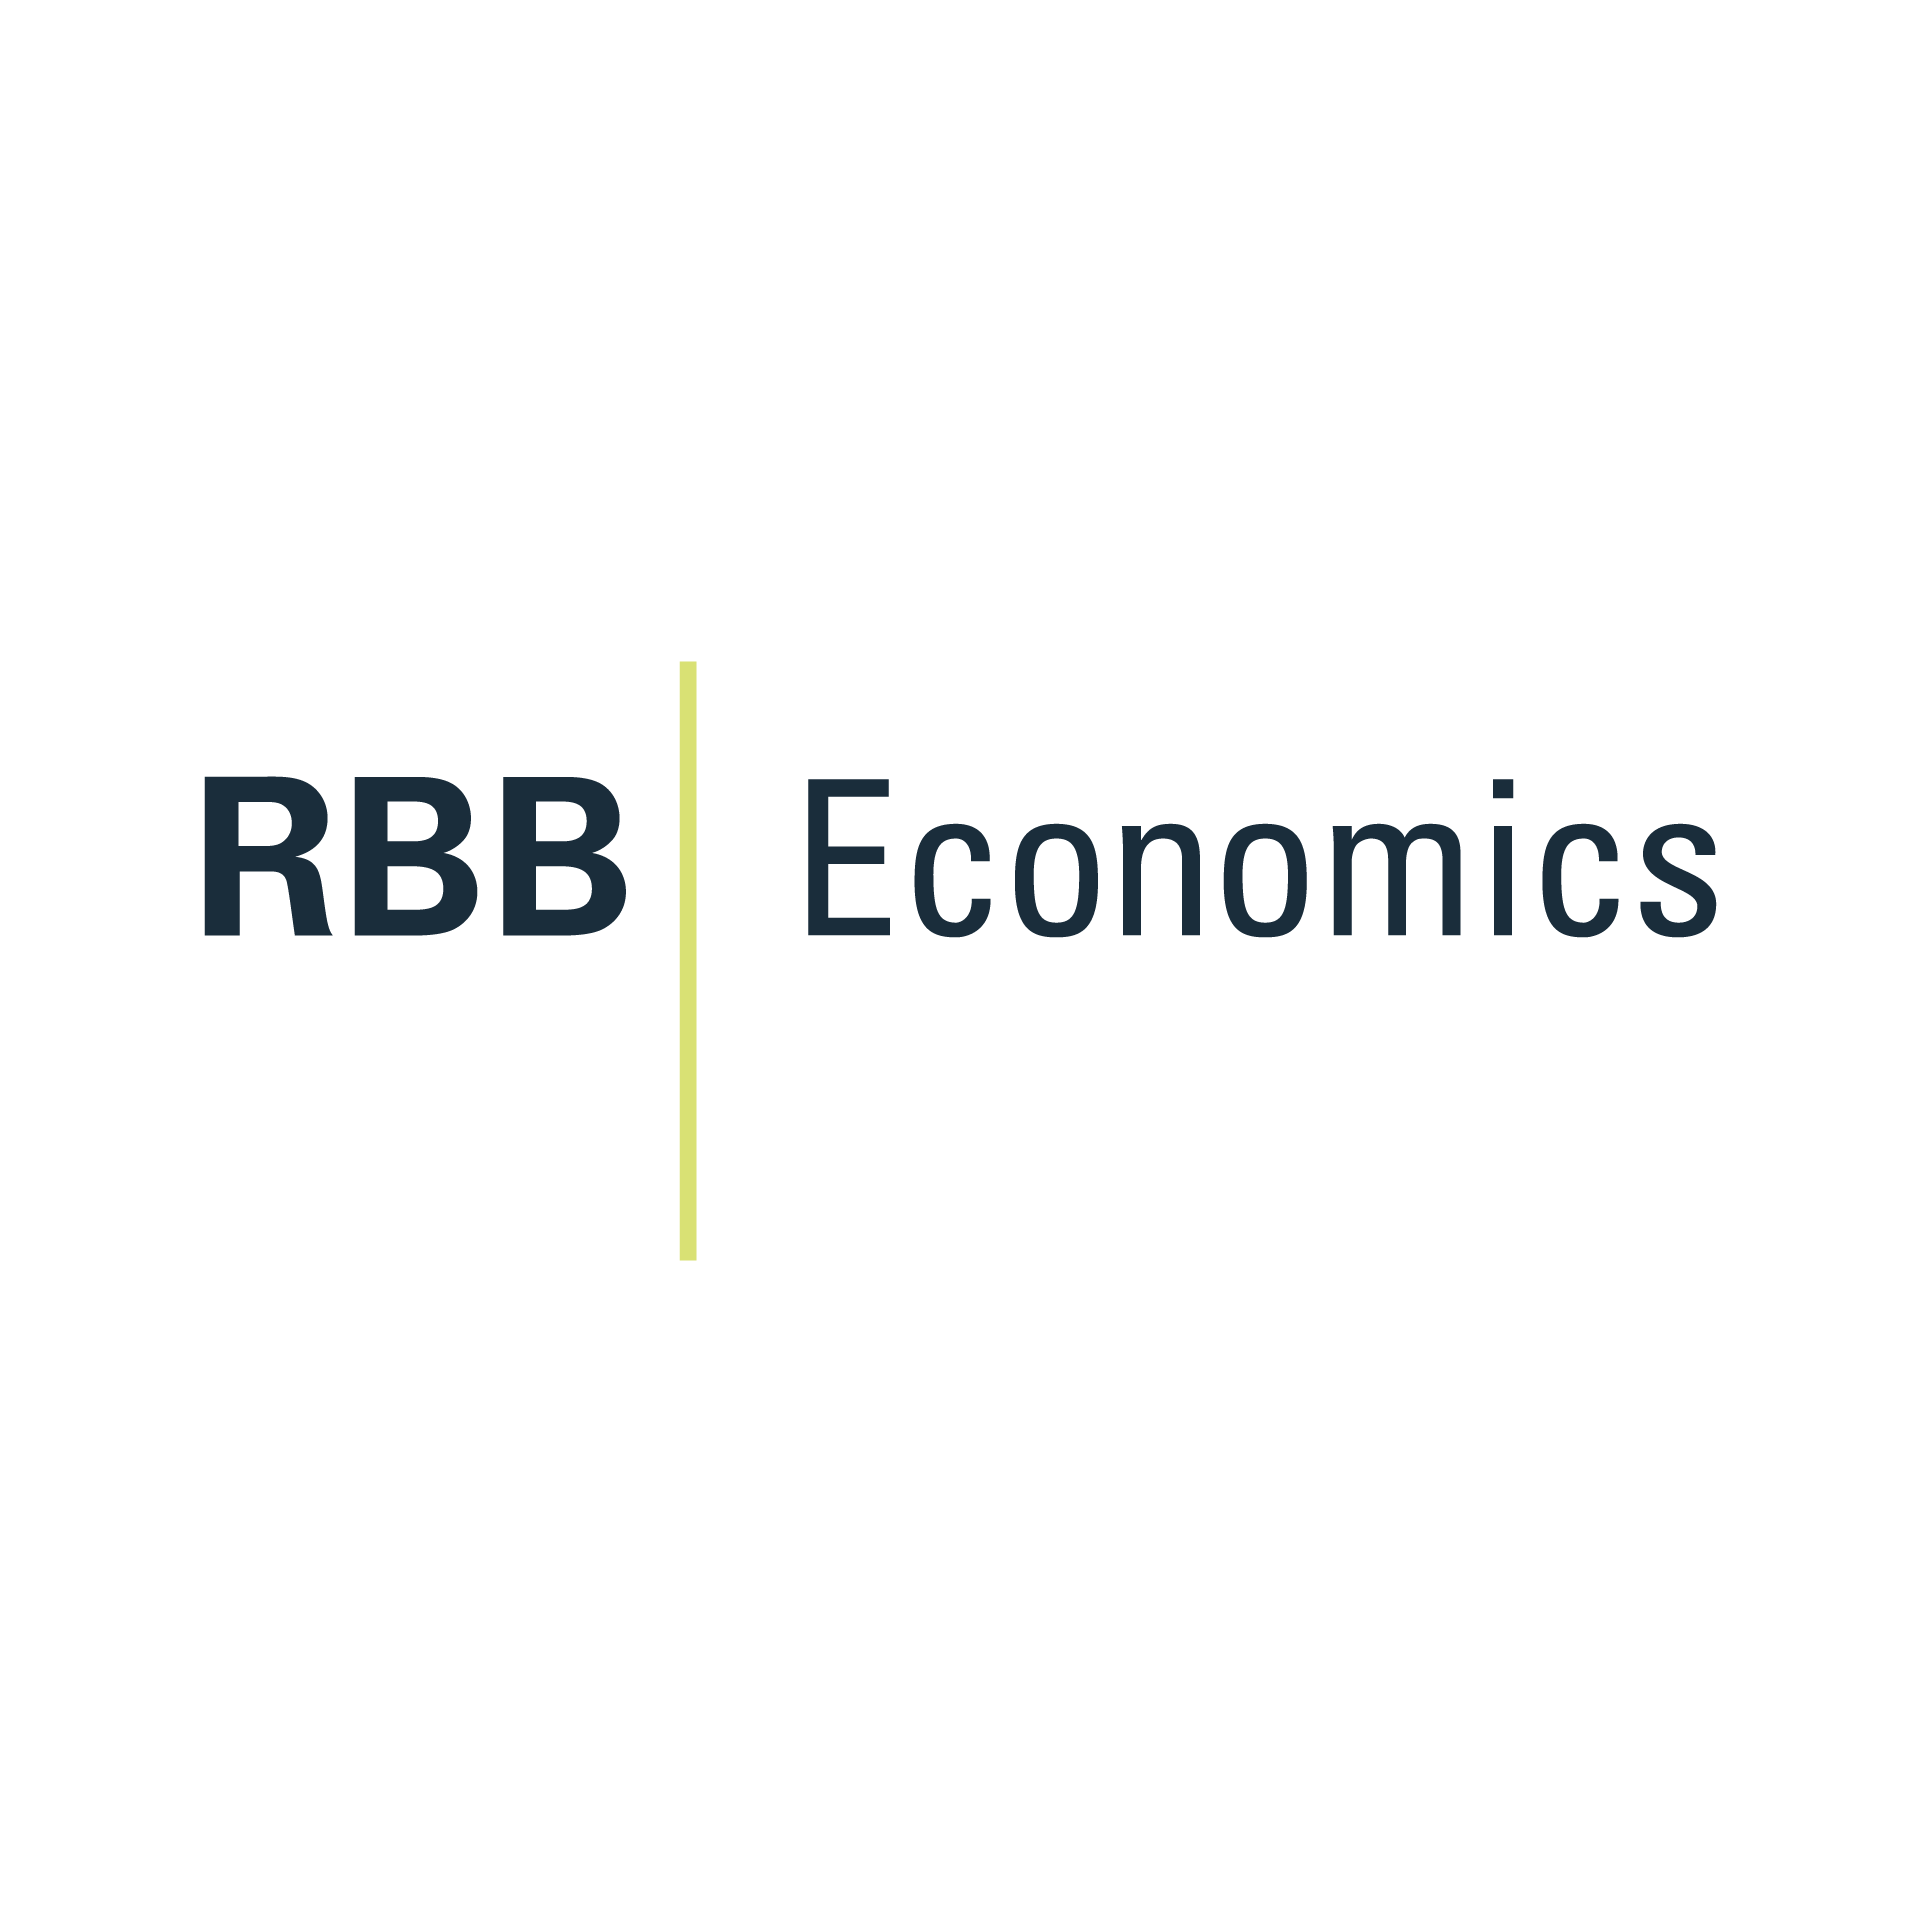 RBB_Economics